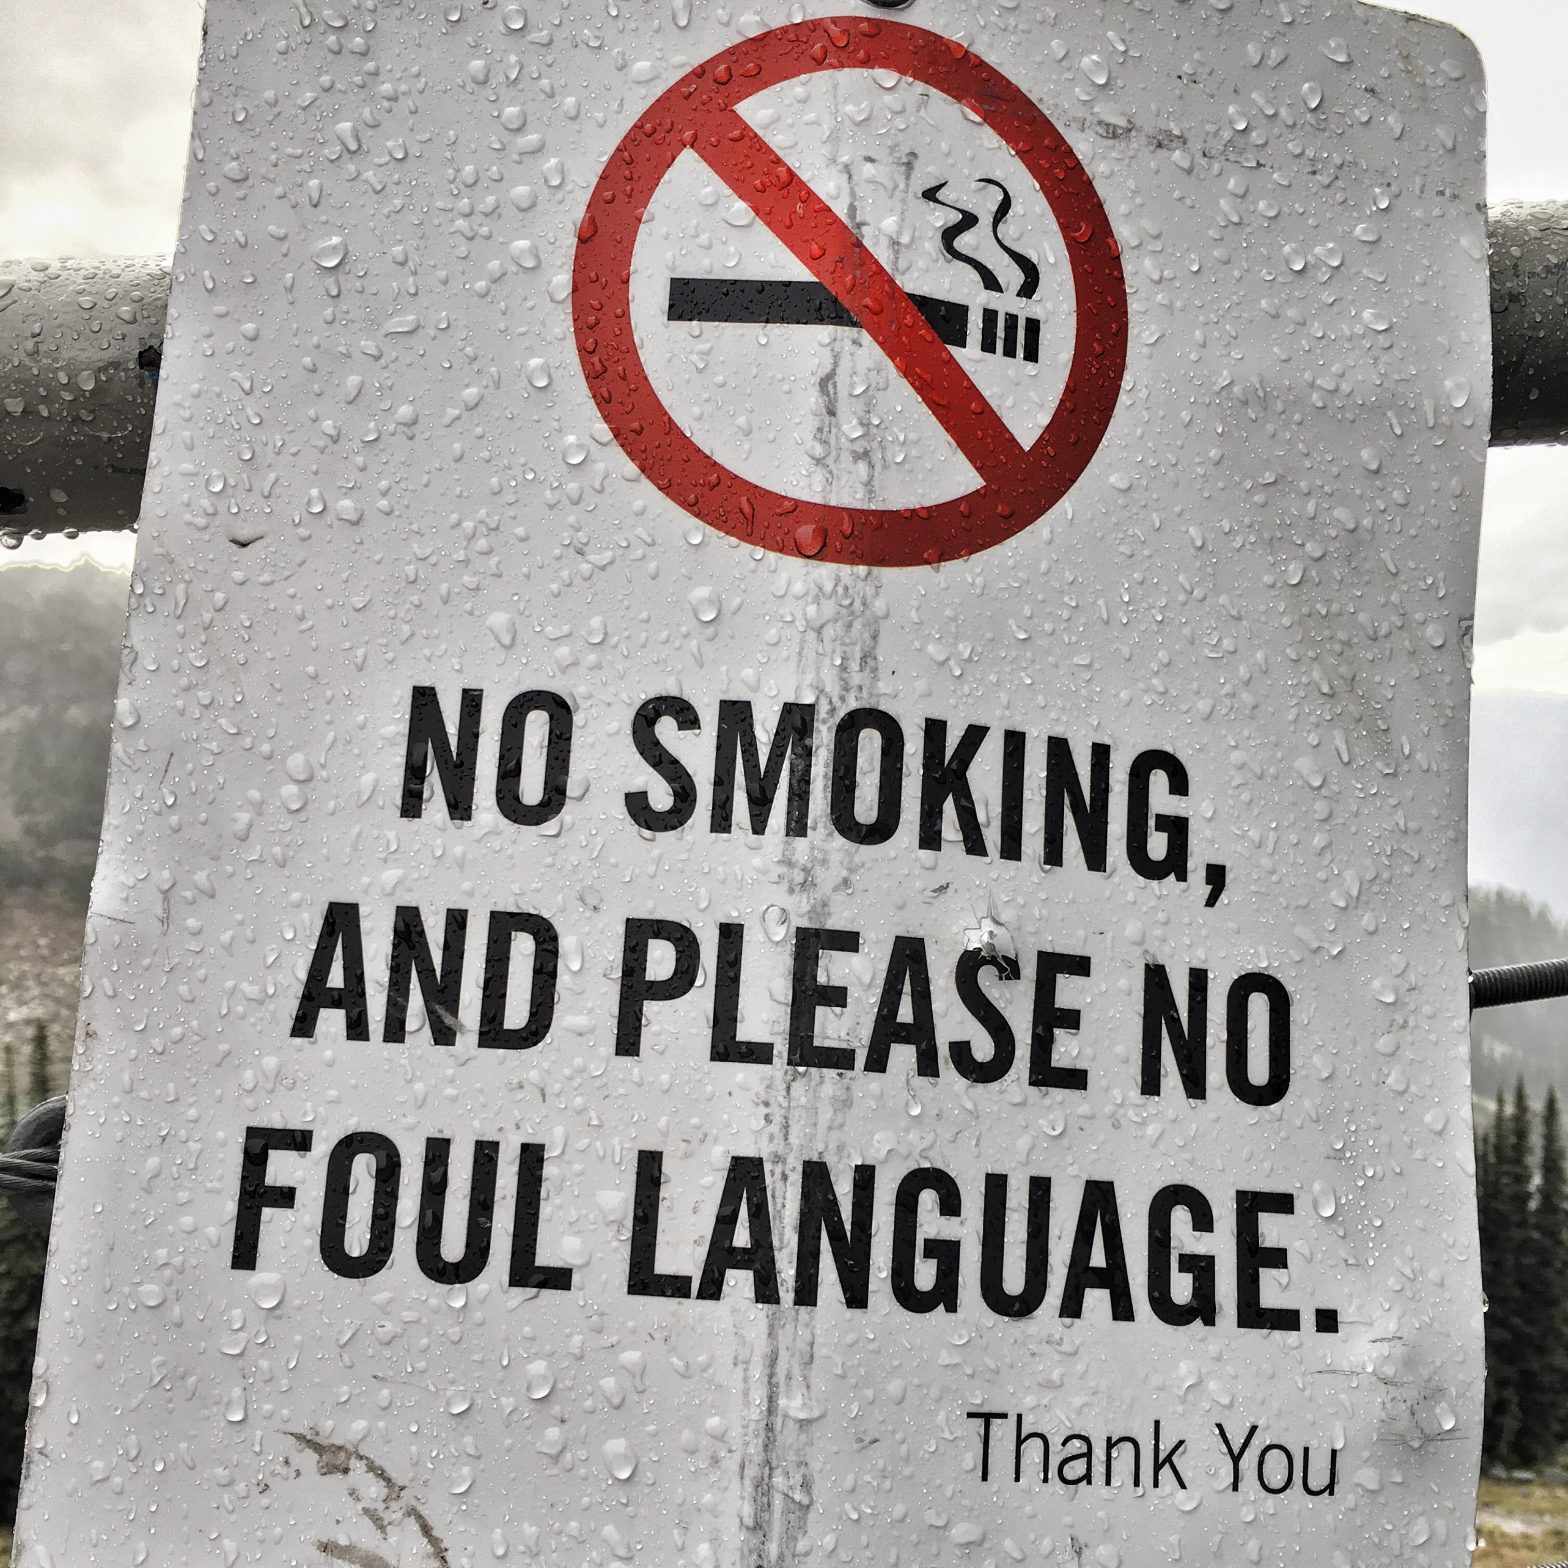 Please no foul language